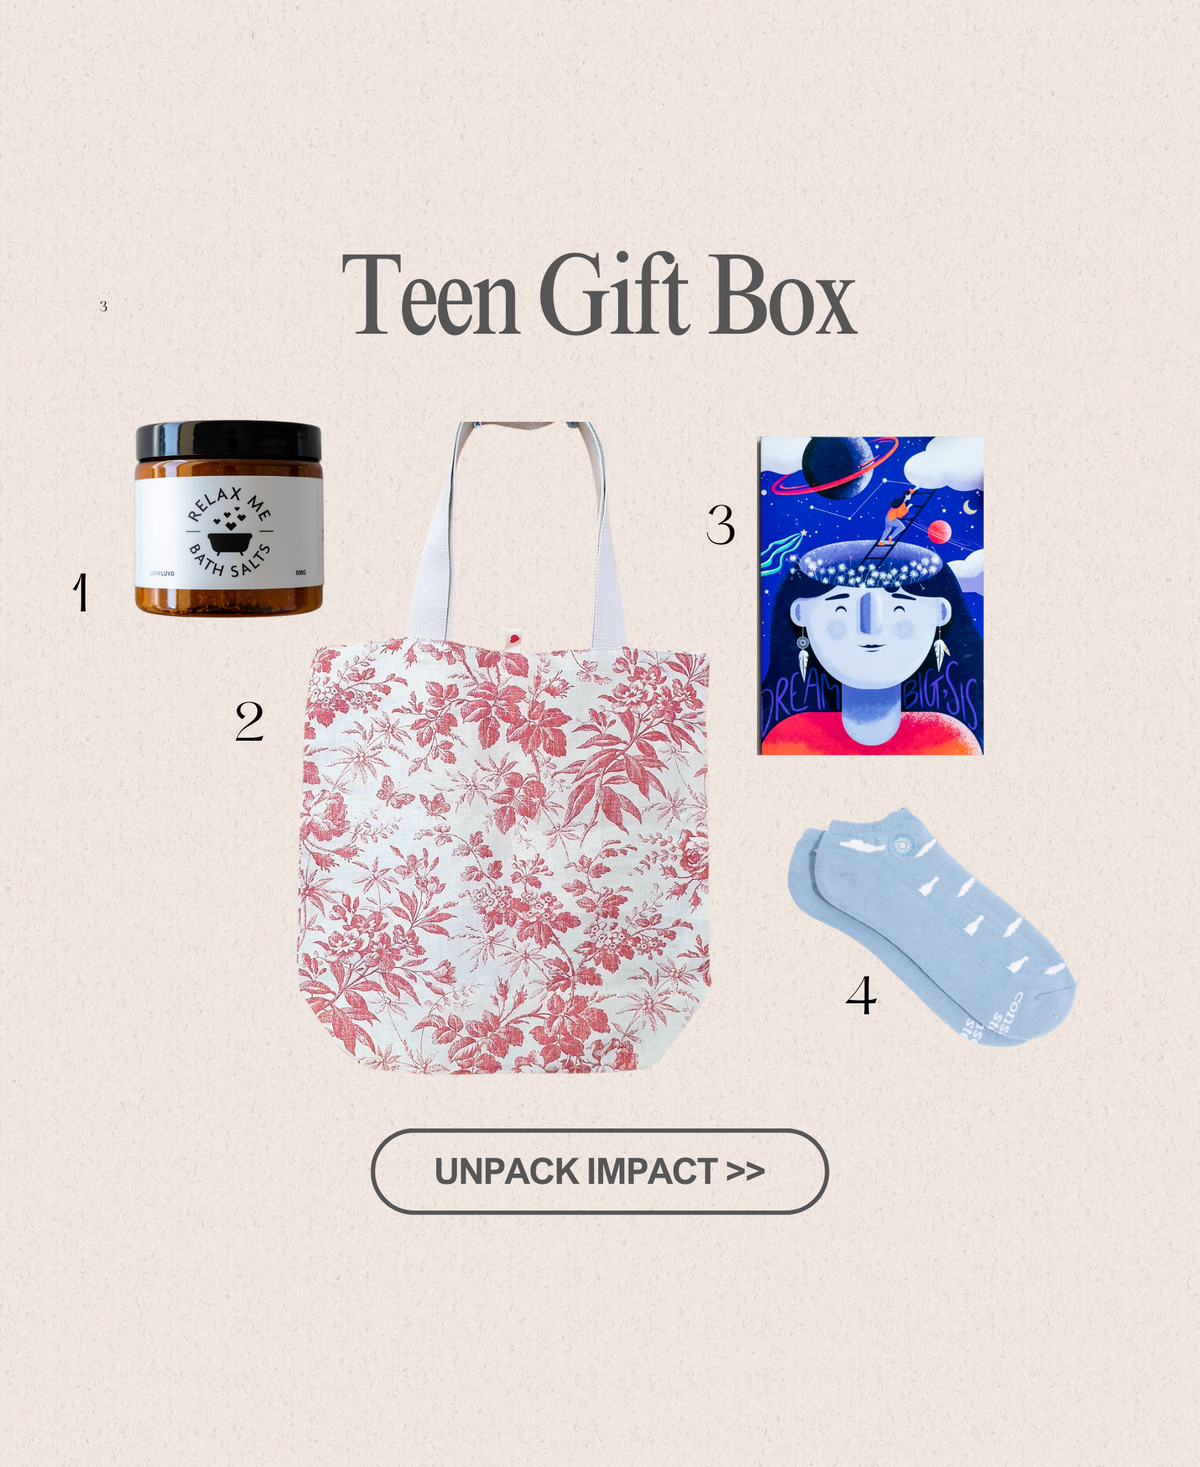 Market Gift Box for teen